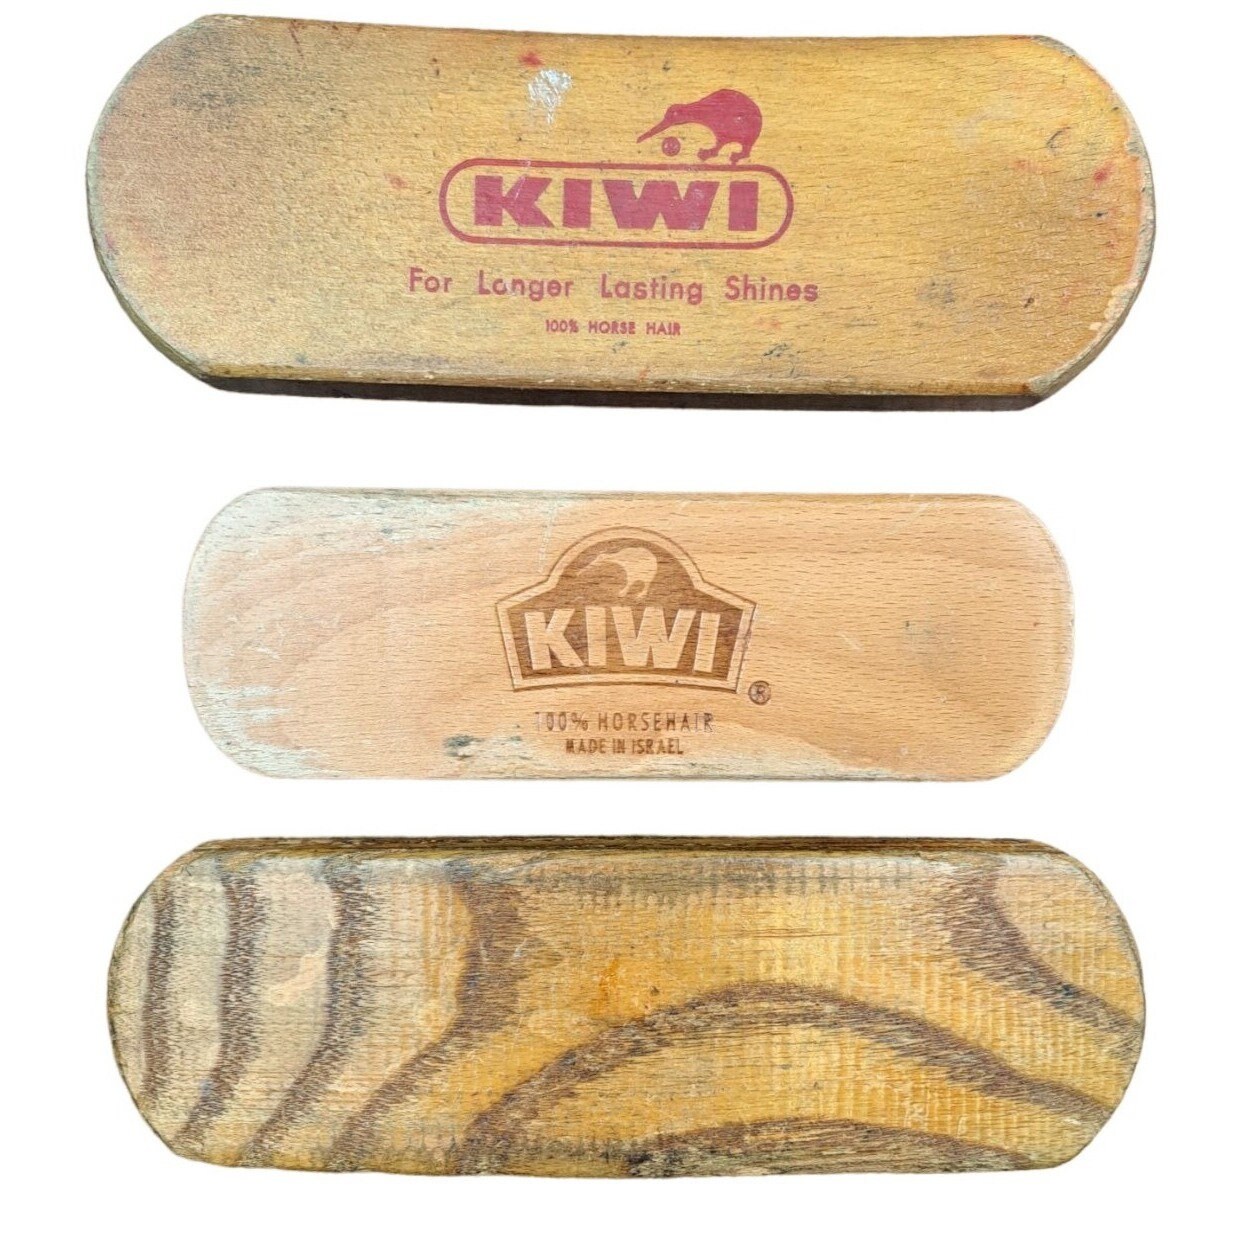 KIWI 5.5 Shoe & Boot SHINE BRUSH 100% Horsehair Brown Bristles W/ Solid  Wood Handle Shining Buffing Buff Polish Leather 5 1/2 Long 19400 